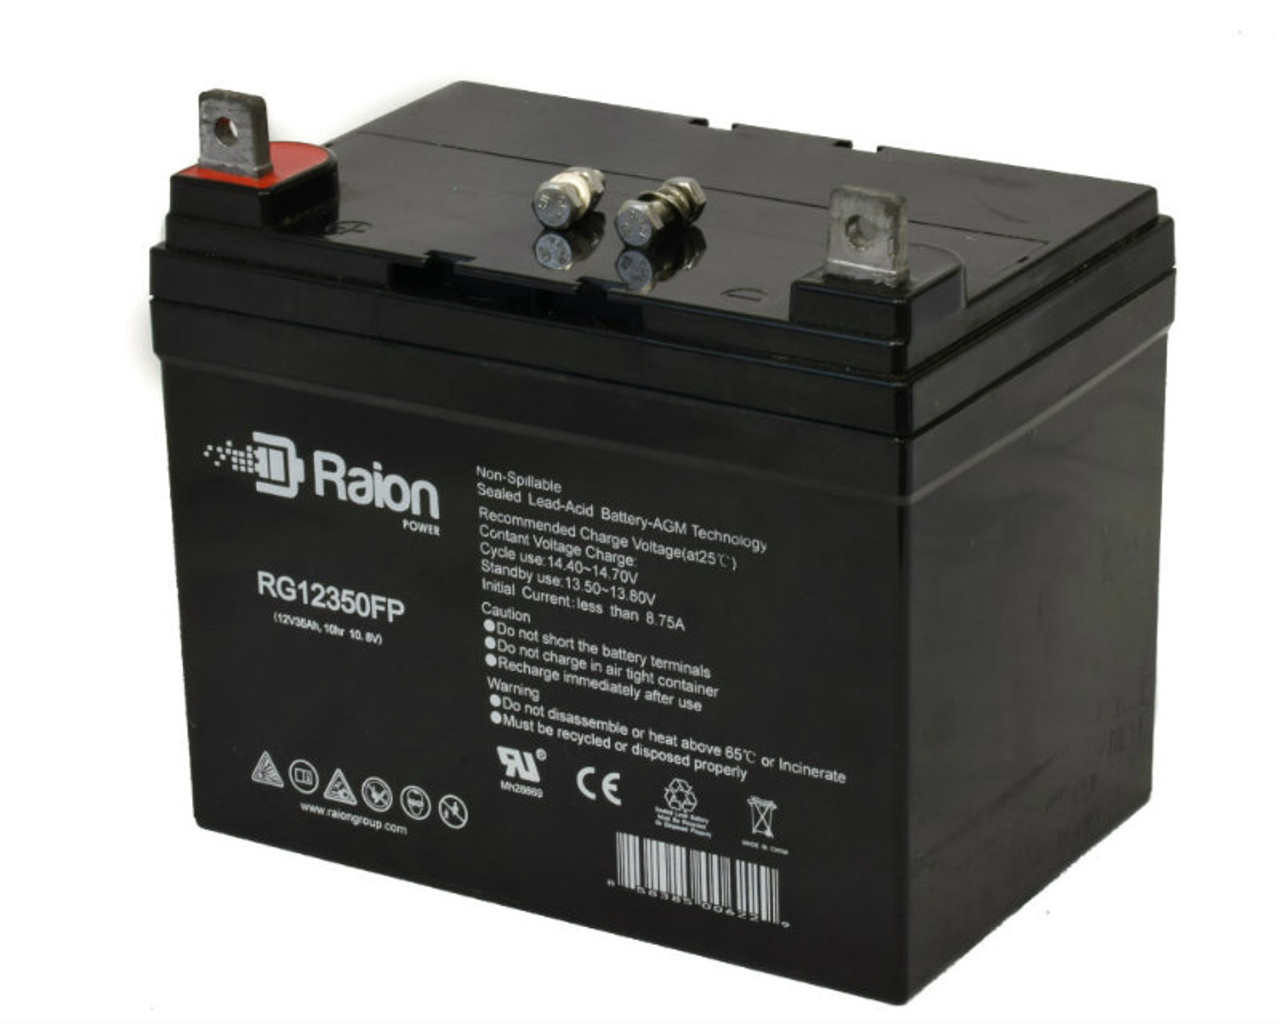 Raion Power Replacement 12V 35Ah RG12350FP Battery for Scag Power Equipment STHM-18KH